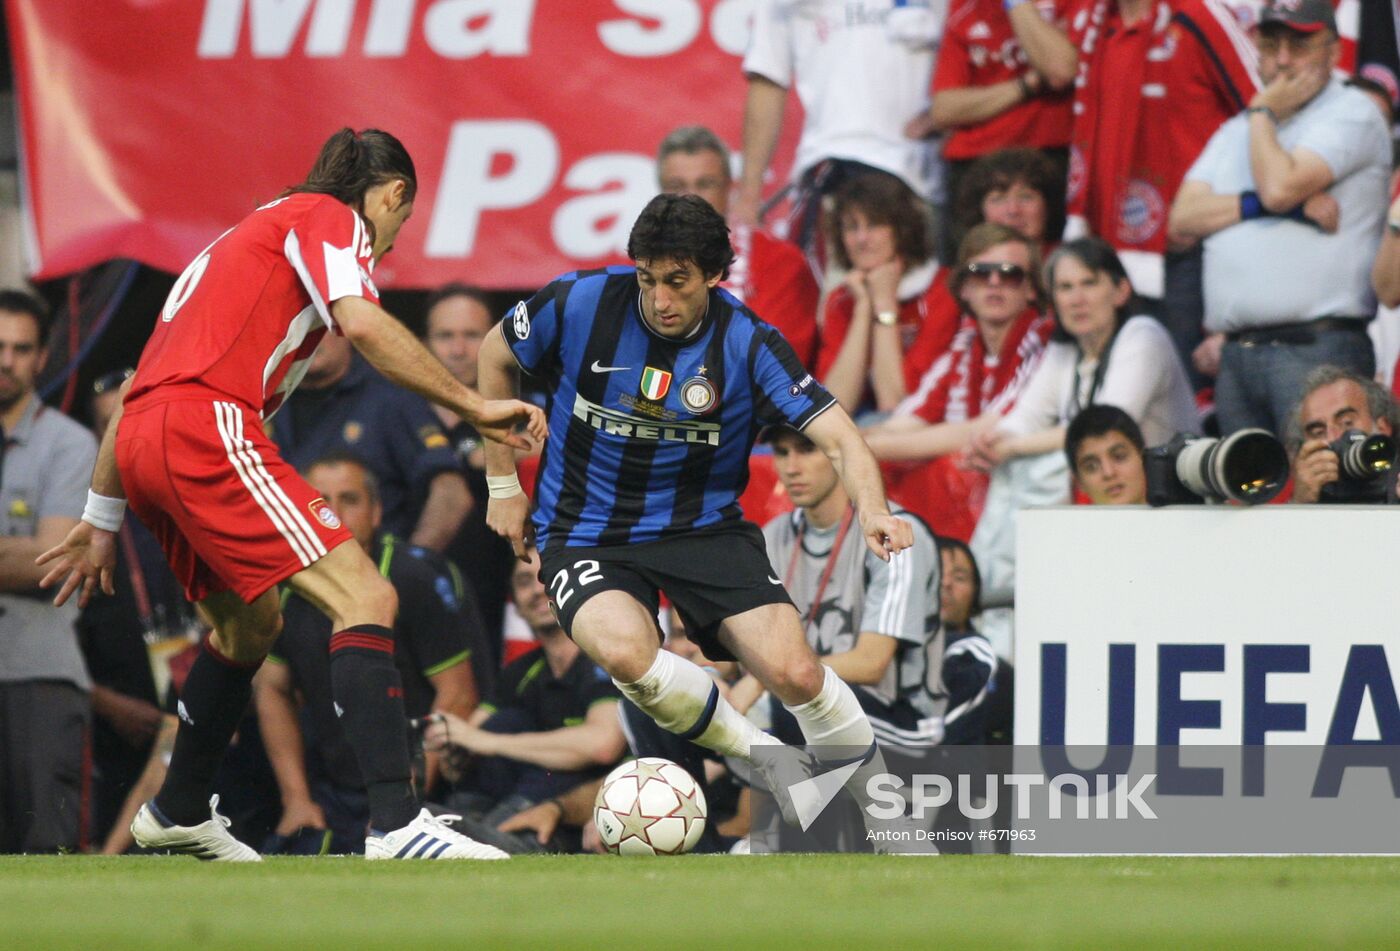 2010 UEFA Champions League Final: Bayern Munich vs. Inter Milan